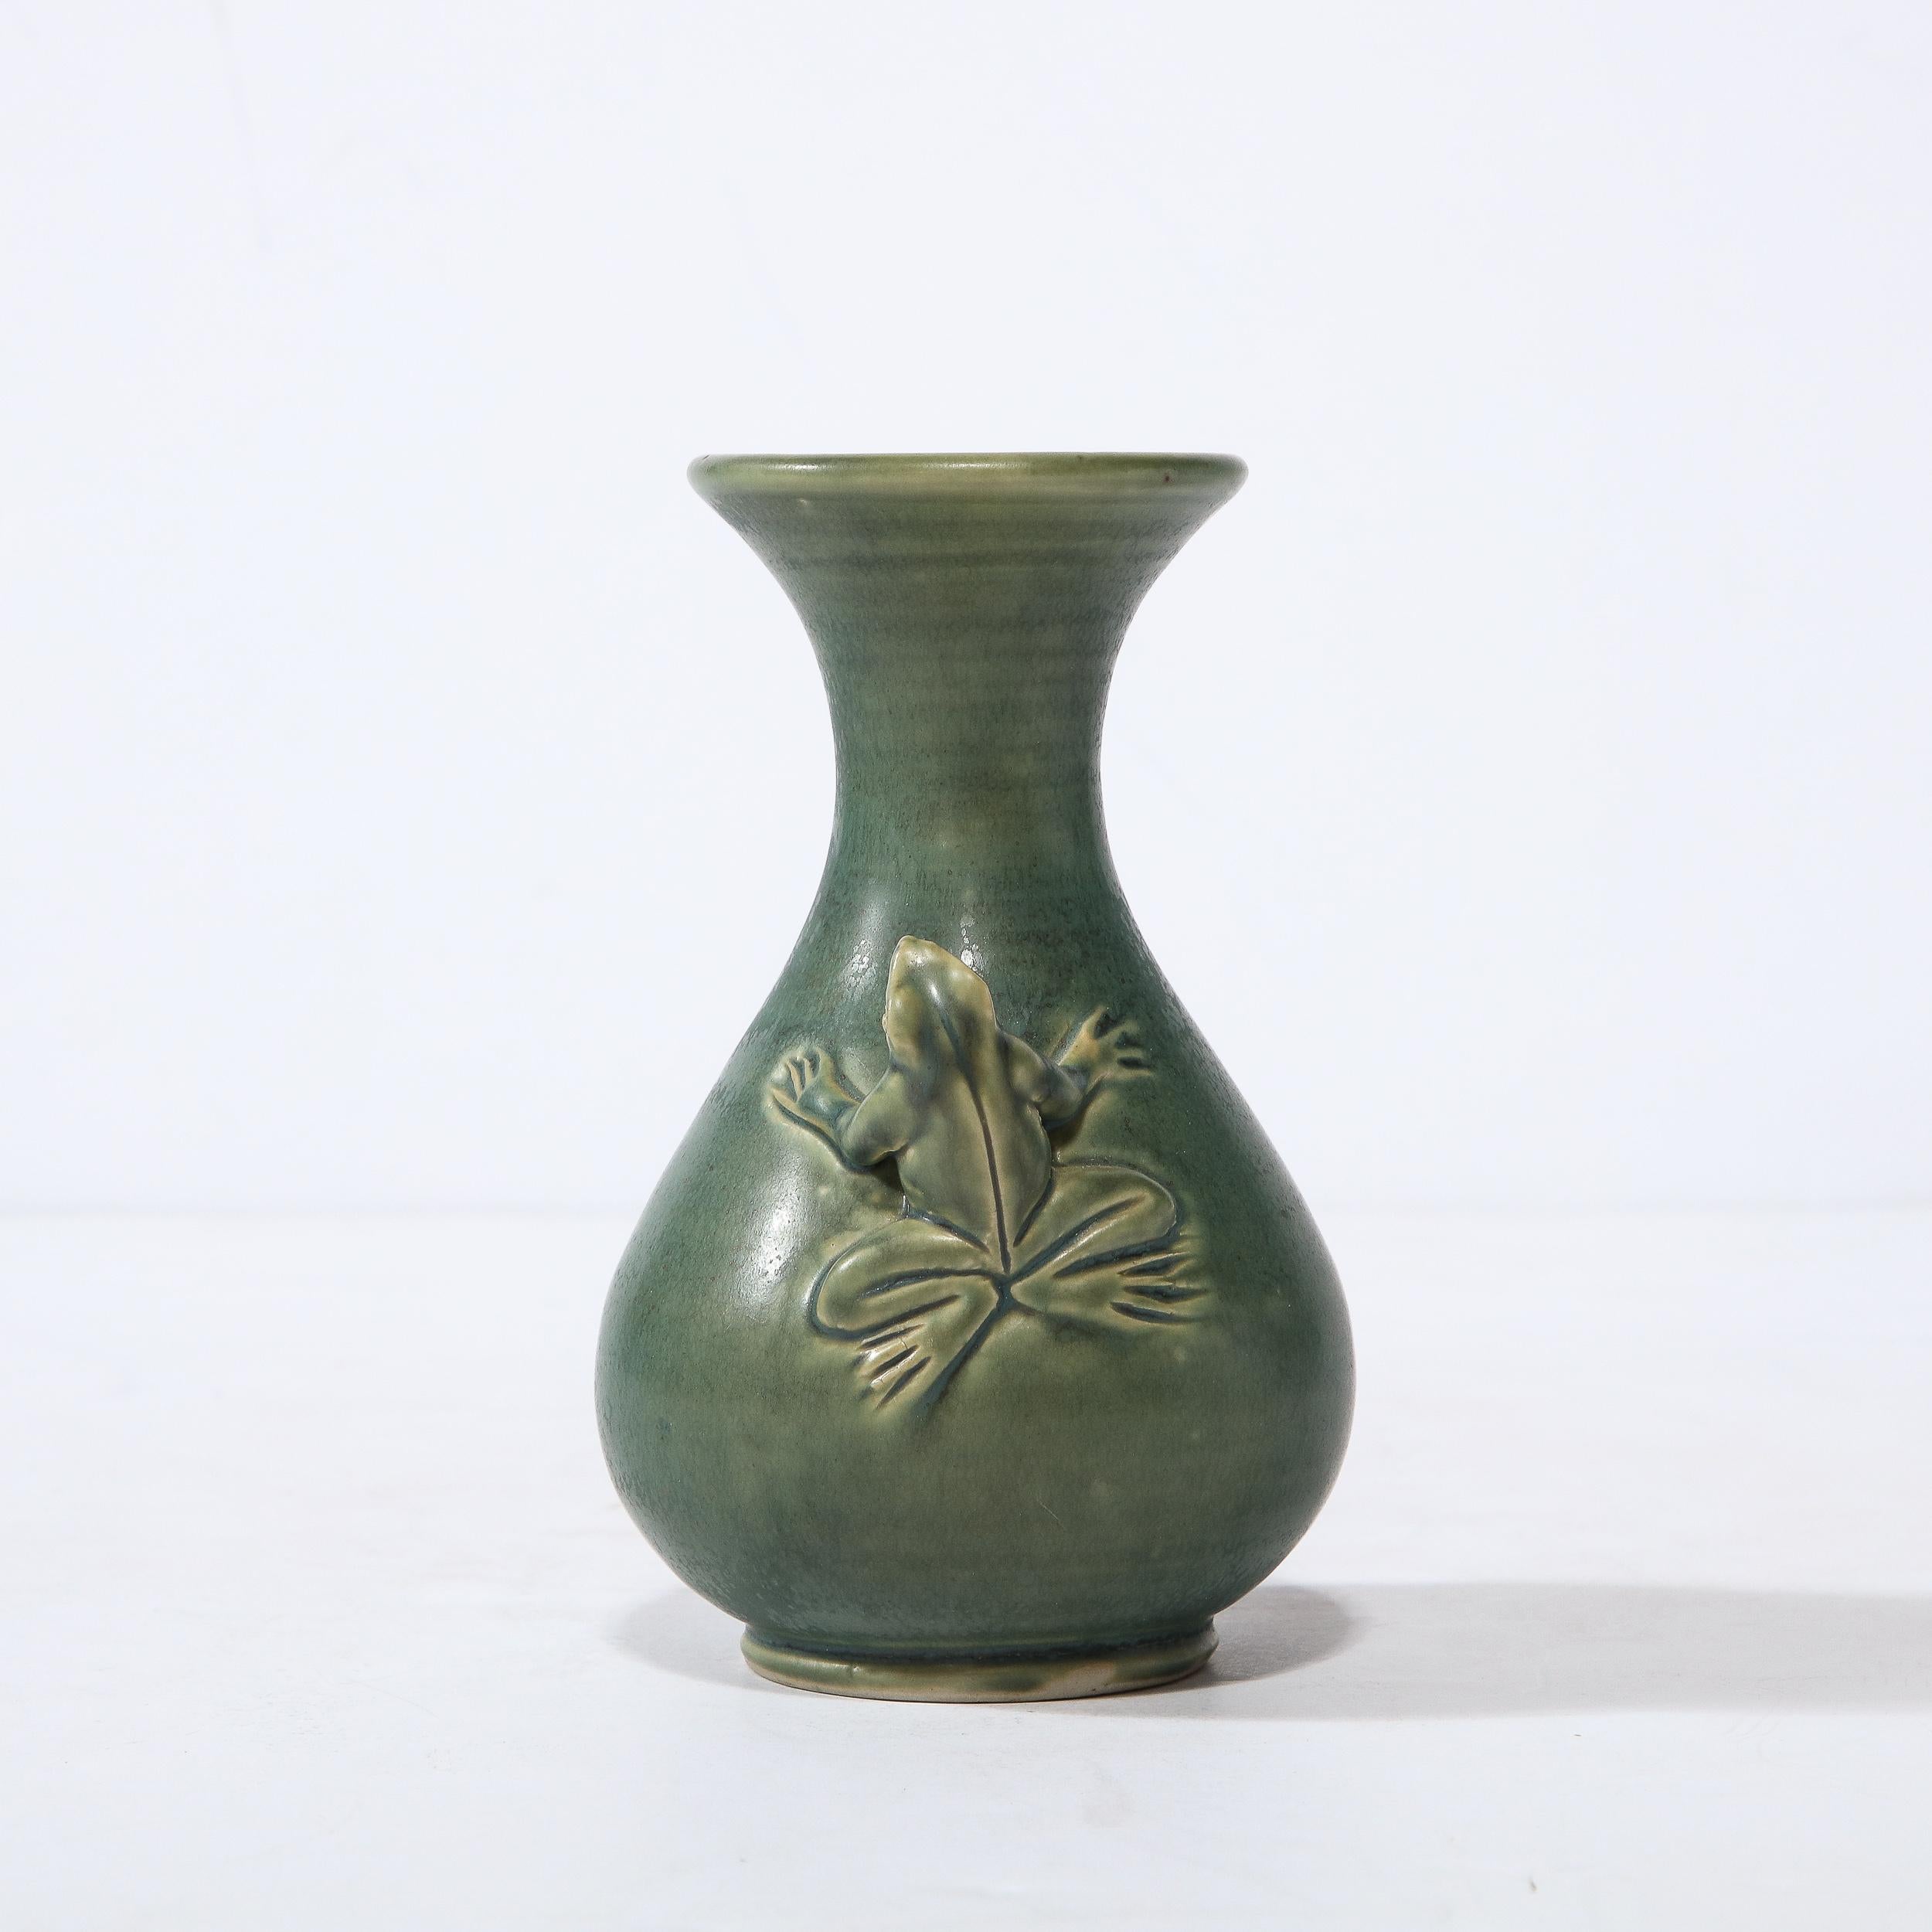 Modernist Sculptural Muted Jade Glazed Ceramic Vase with Frog Motif in Relief For Sale 4